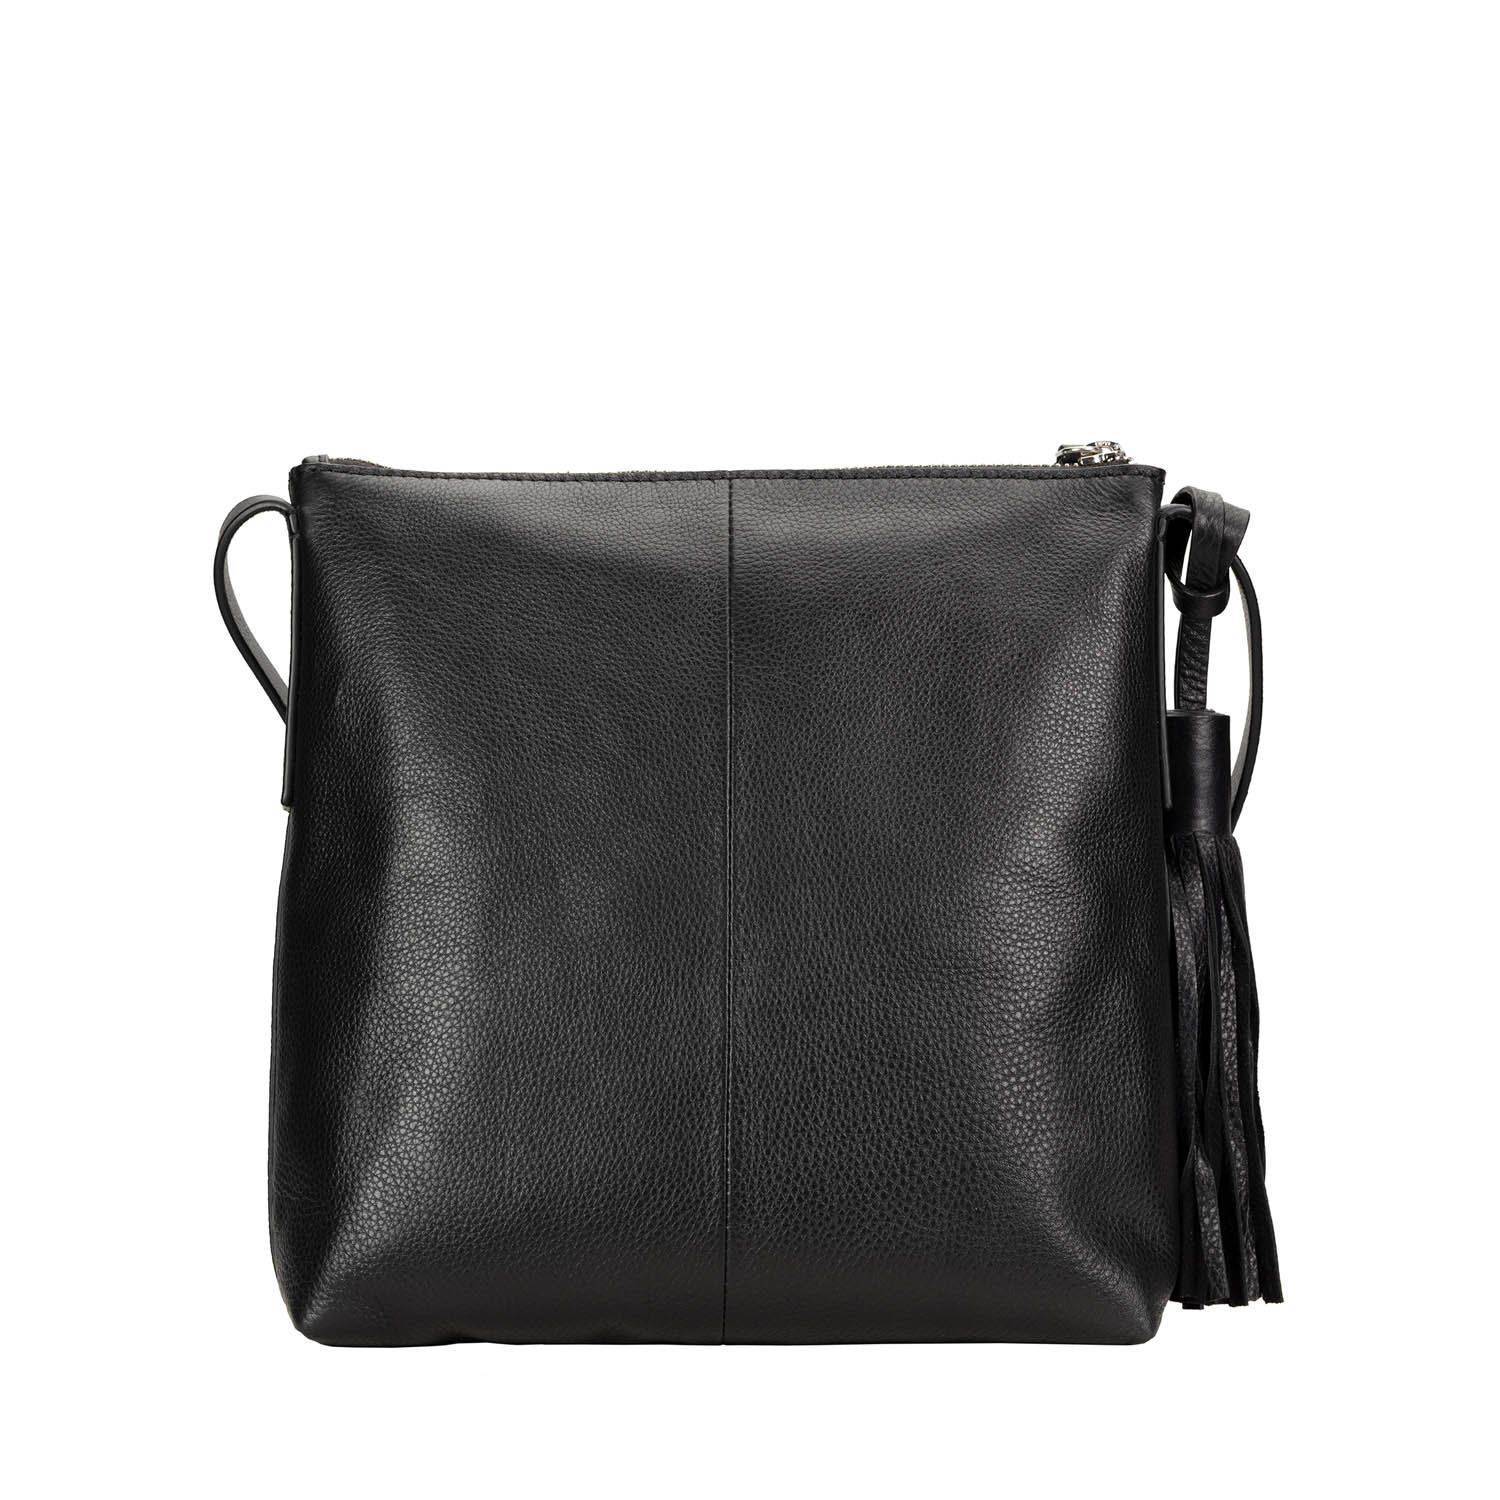 Городская сумка Clarks Topsham Shine 26148208, цвет черный, размер ONE SIZE - фото 1